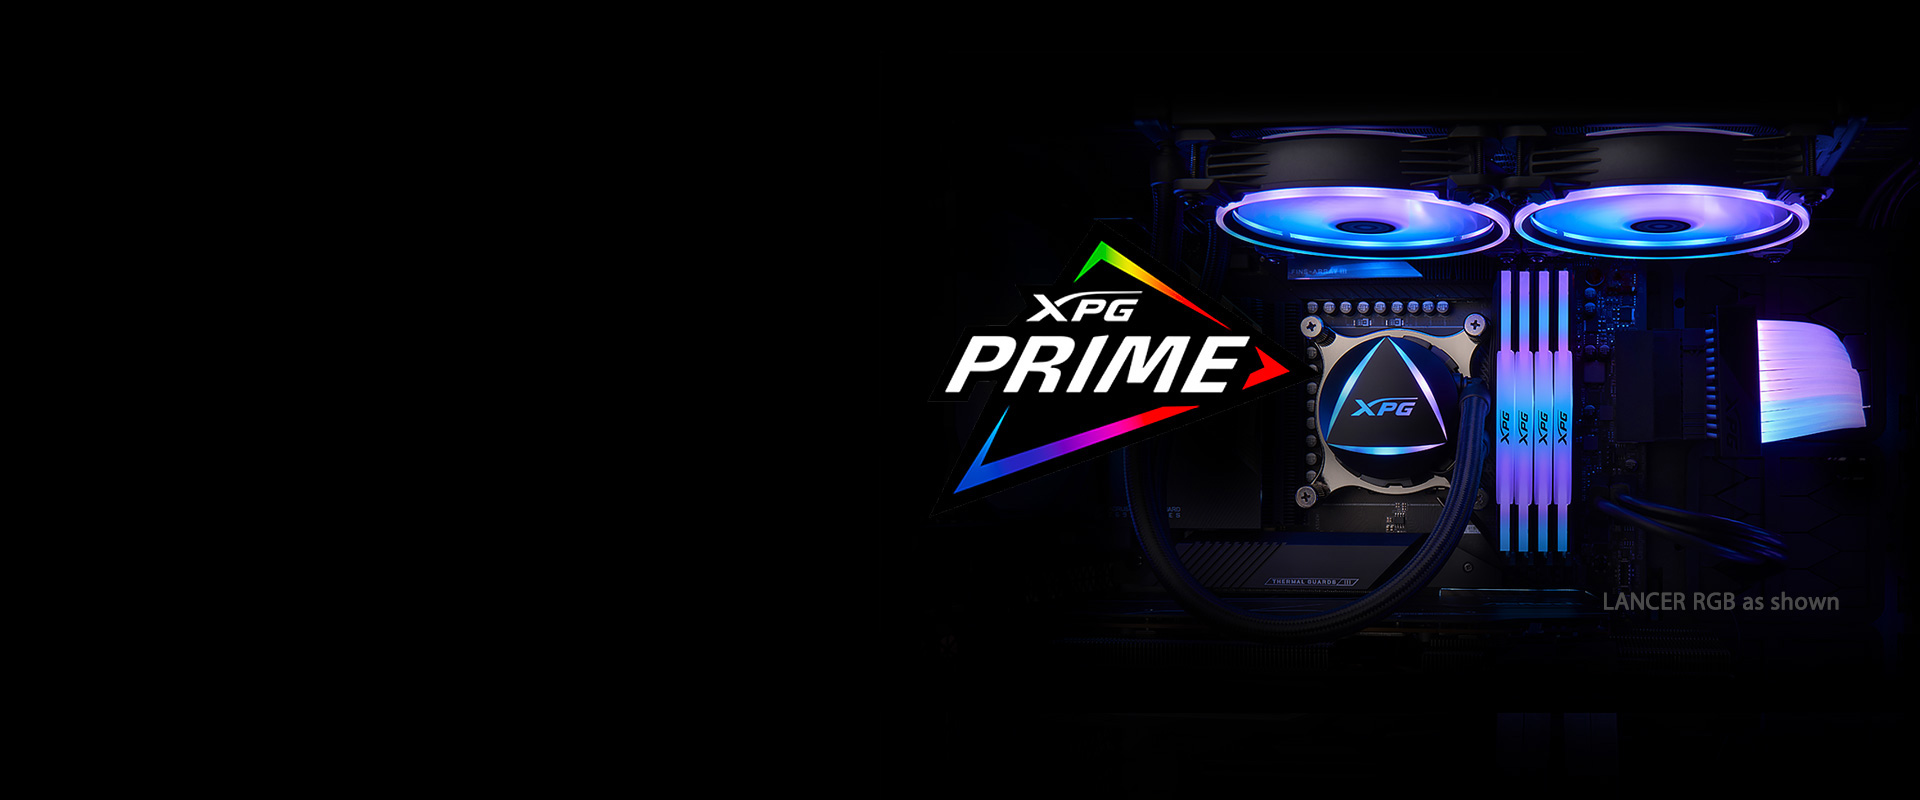 Lightshow with XPG Prime